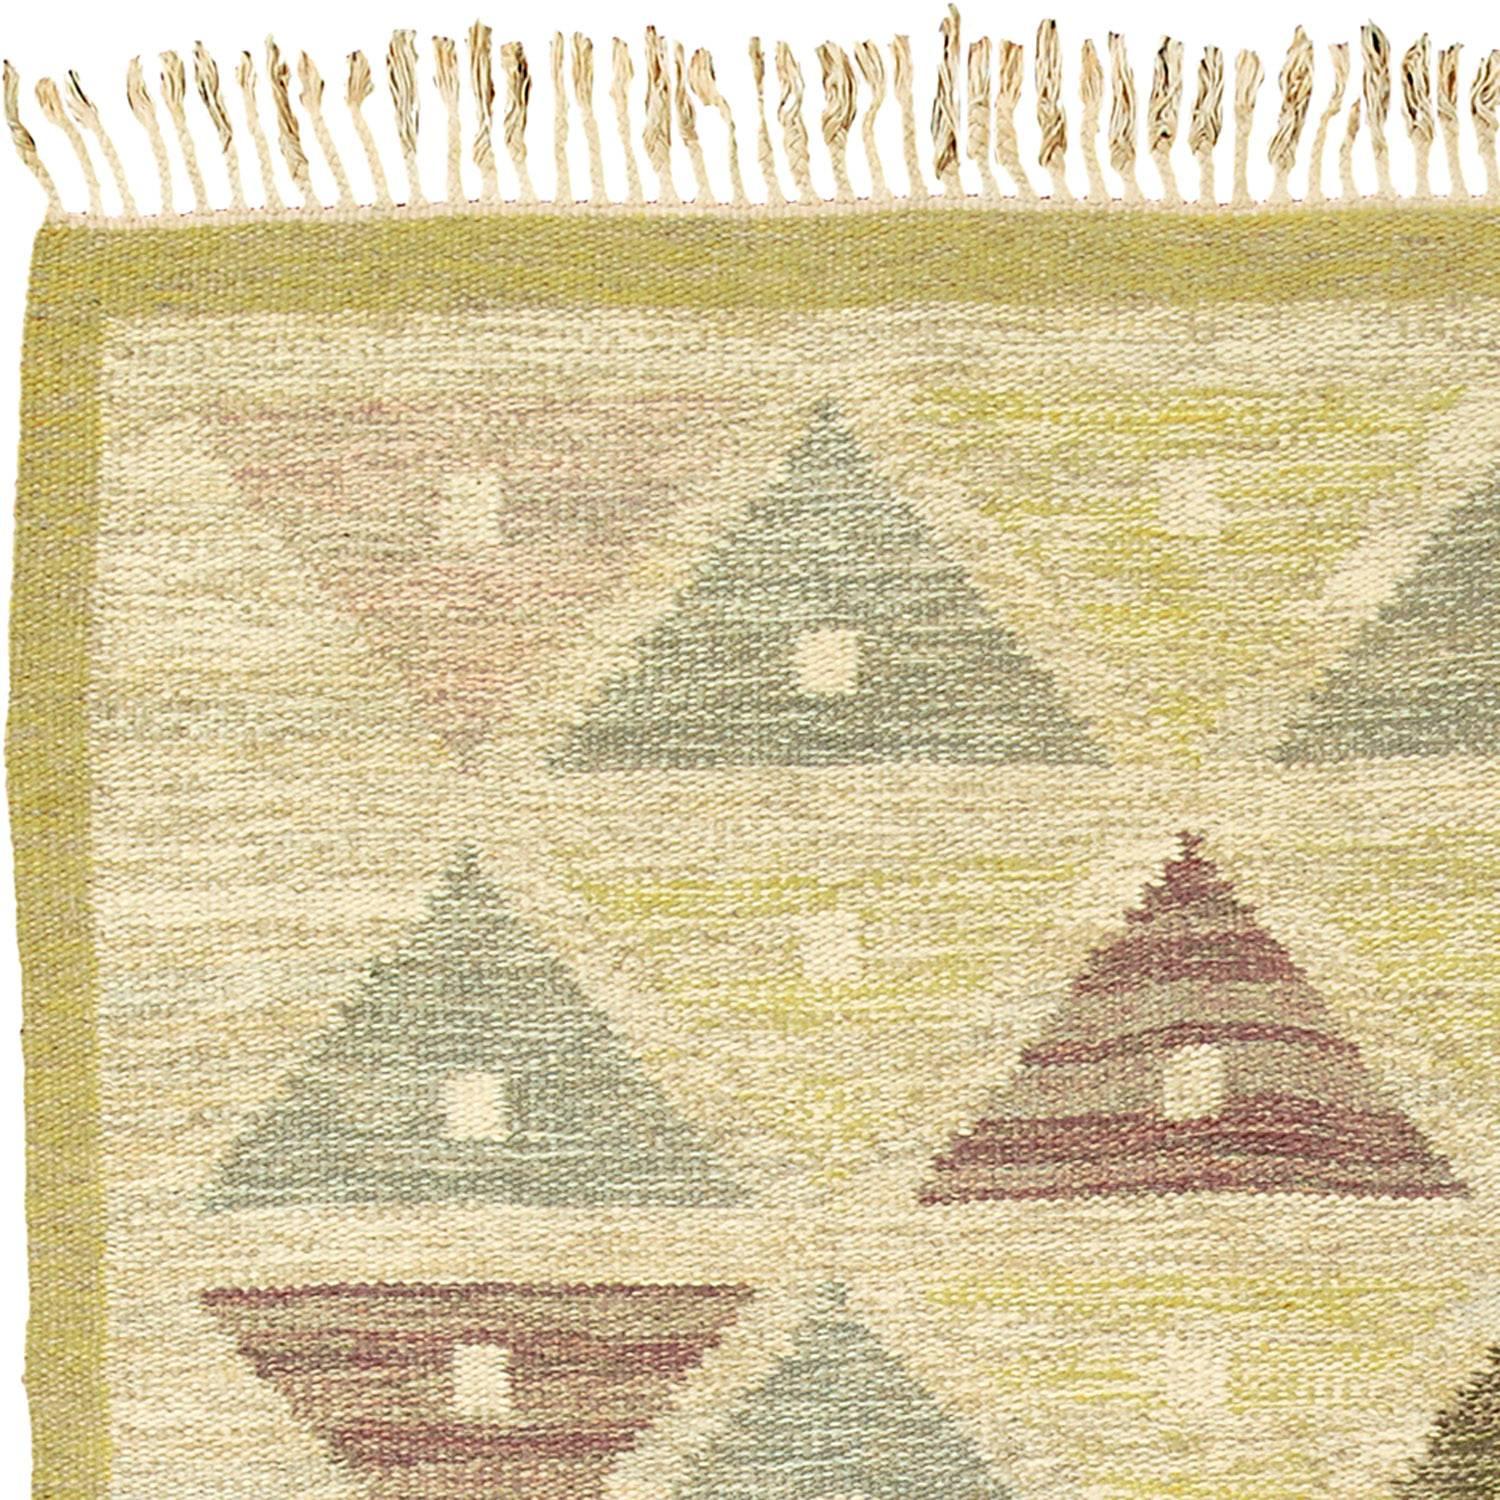 Mid-20th century Swedish flat-weave carpet initialed 